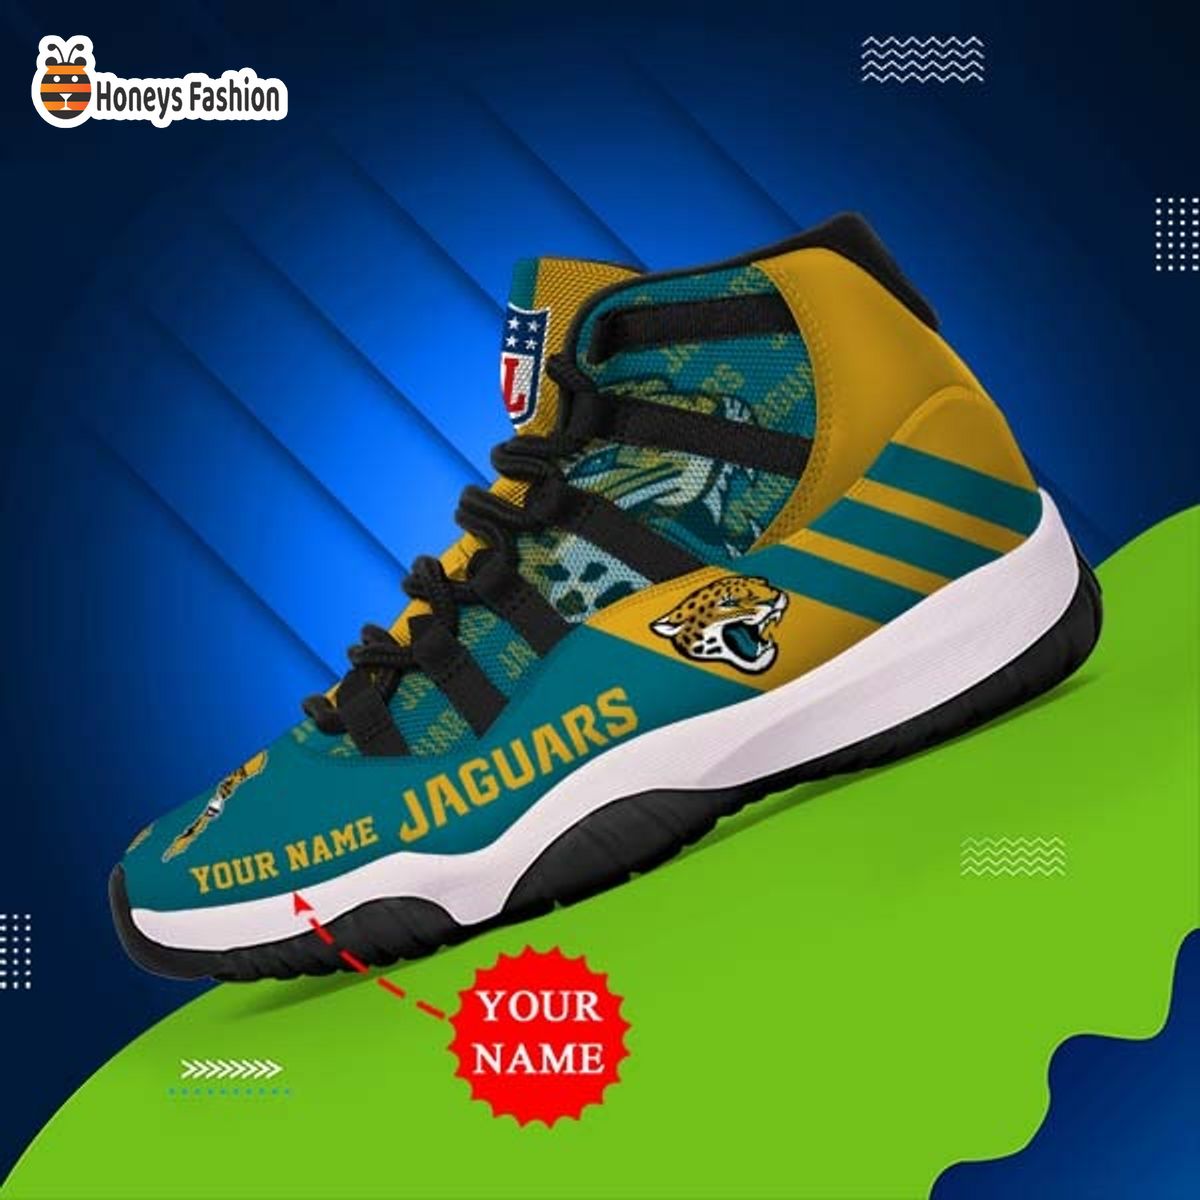 Jacksonville Jaguars NFL Adidas Personalized Air Jordan 11 Shoes